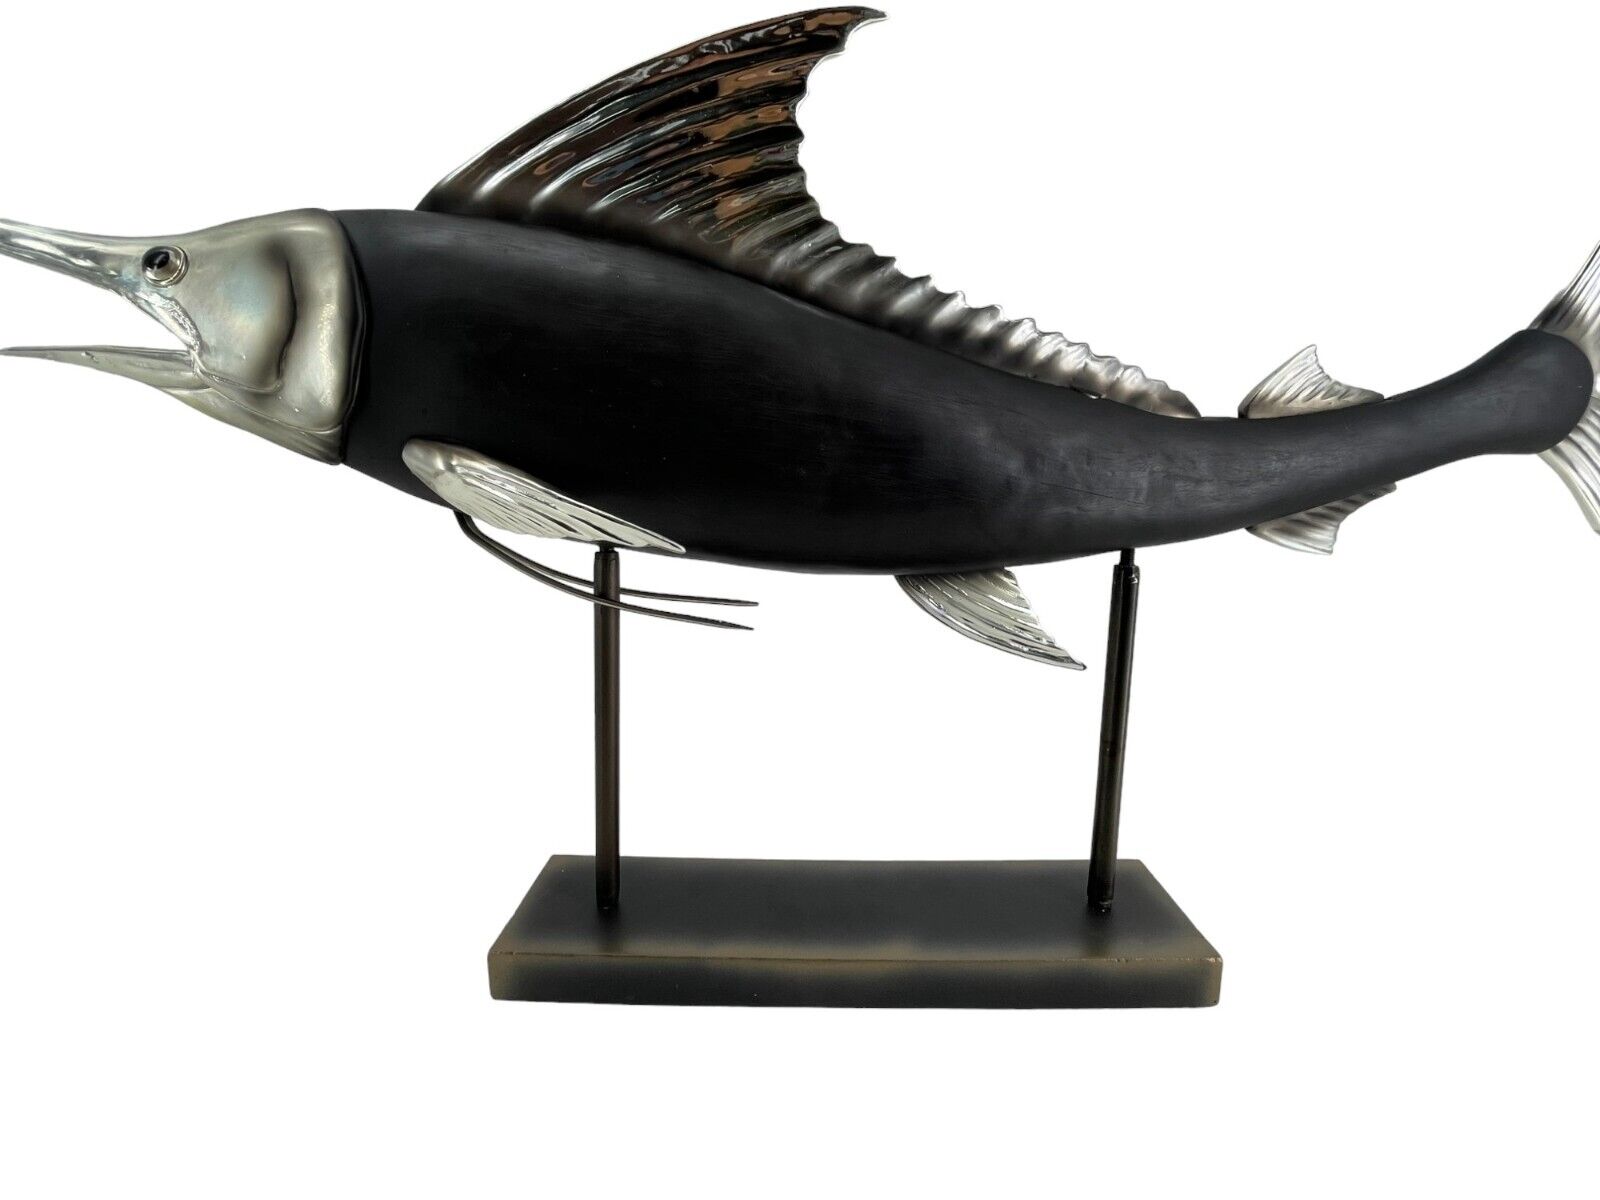 Resin swordfish Metallic silver and black marlin on black stand.